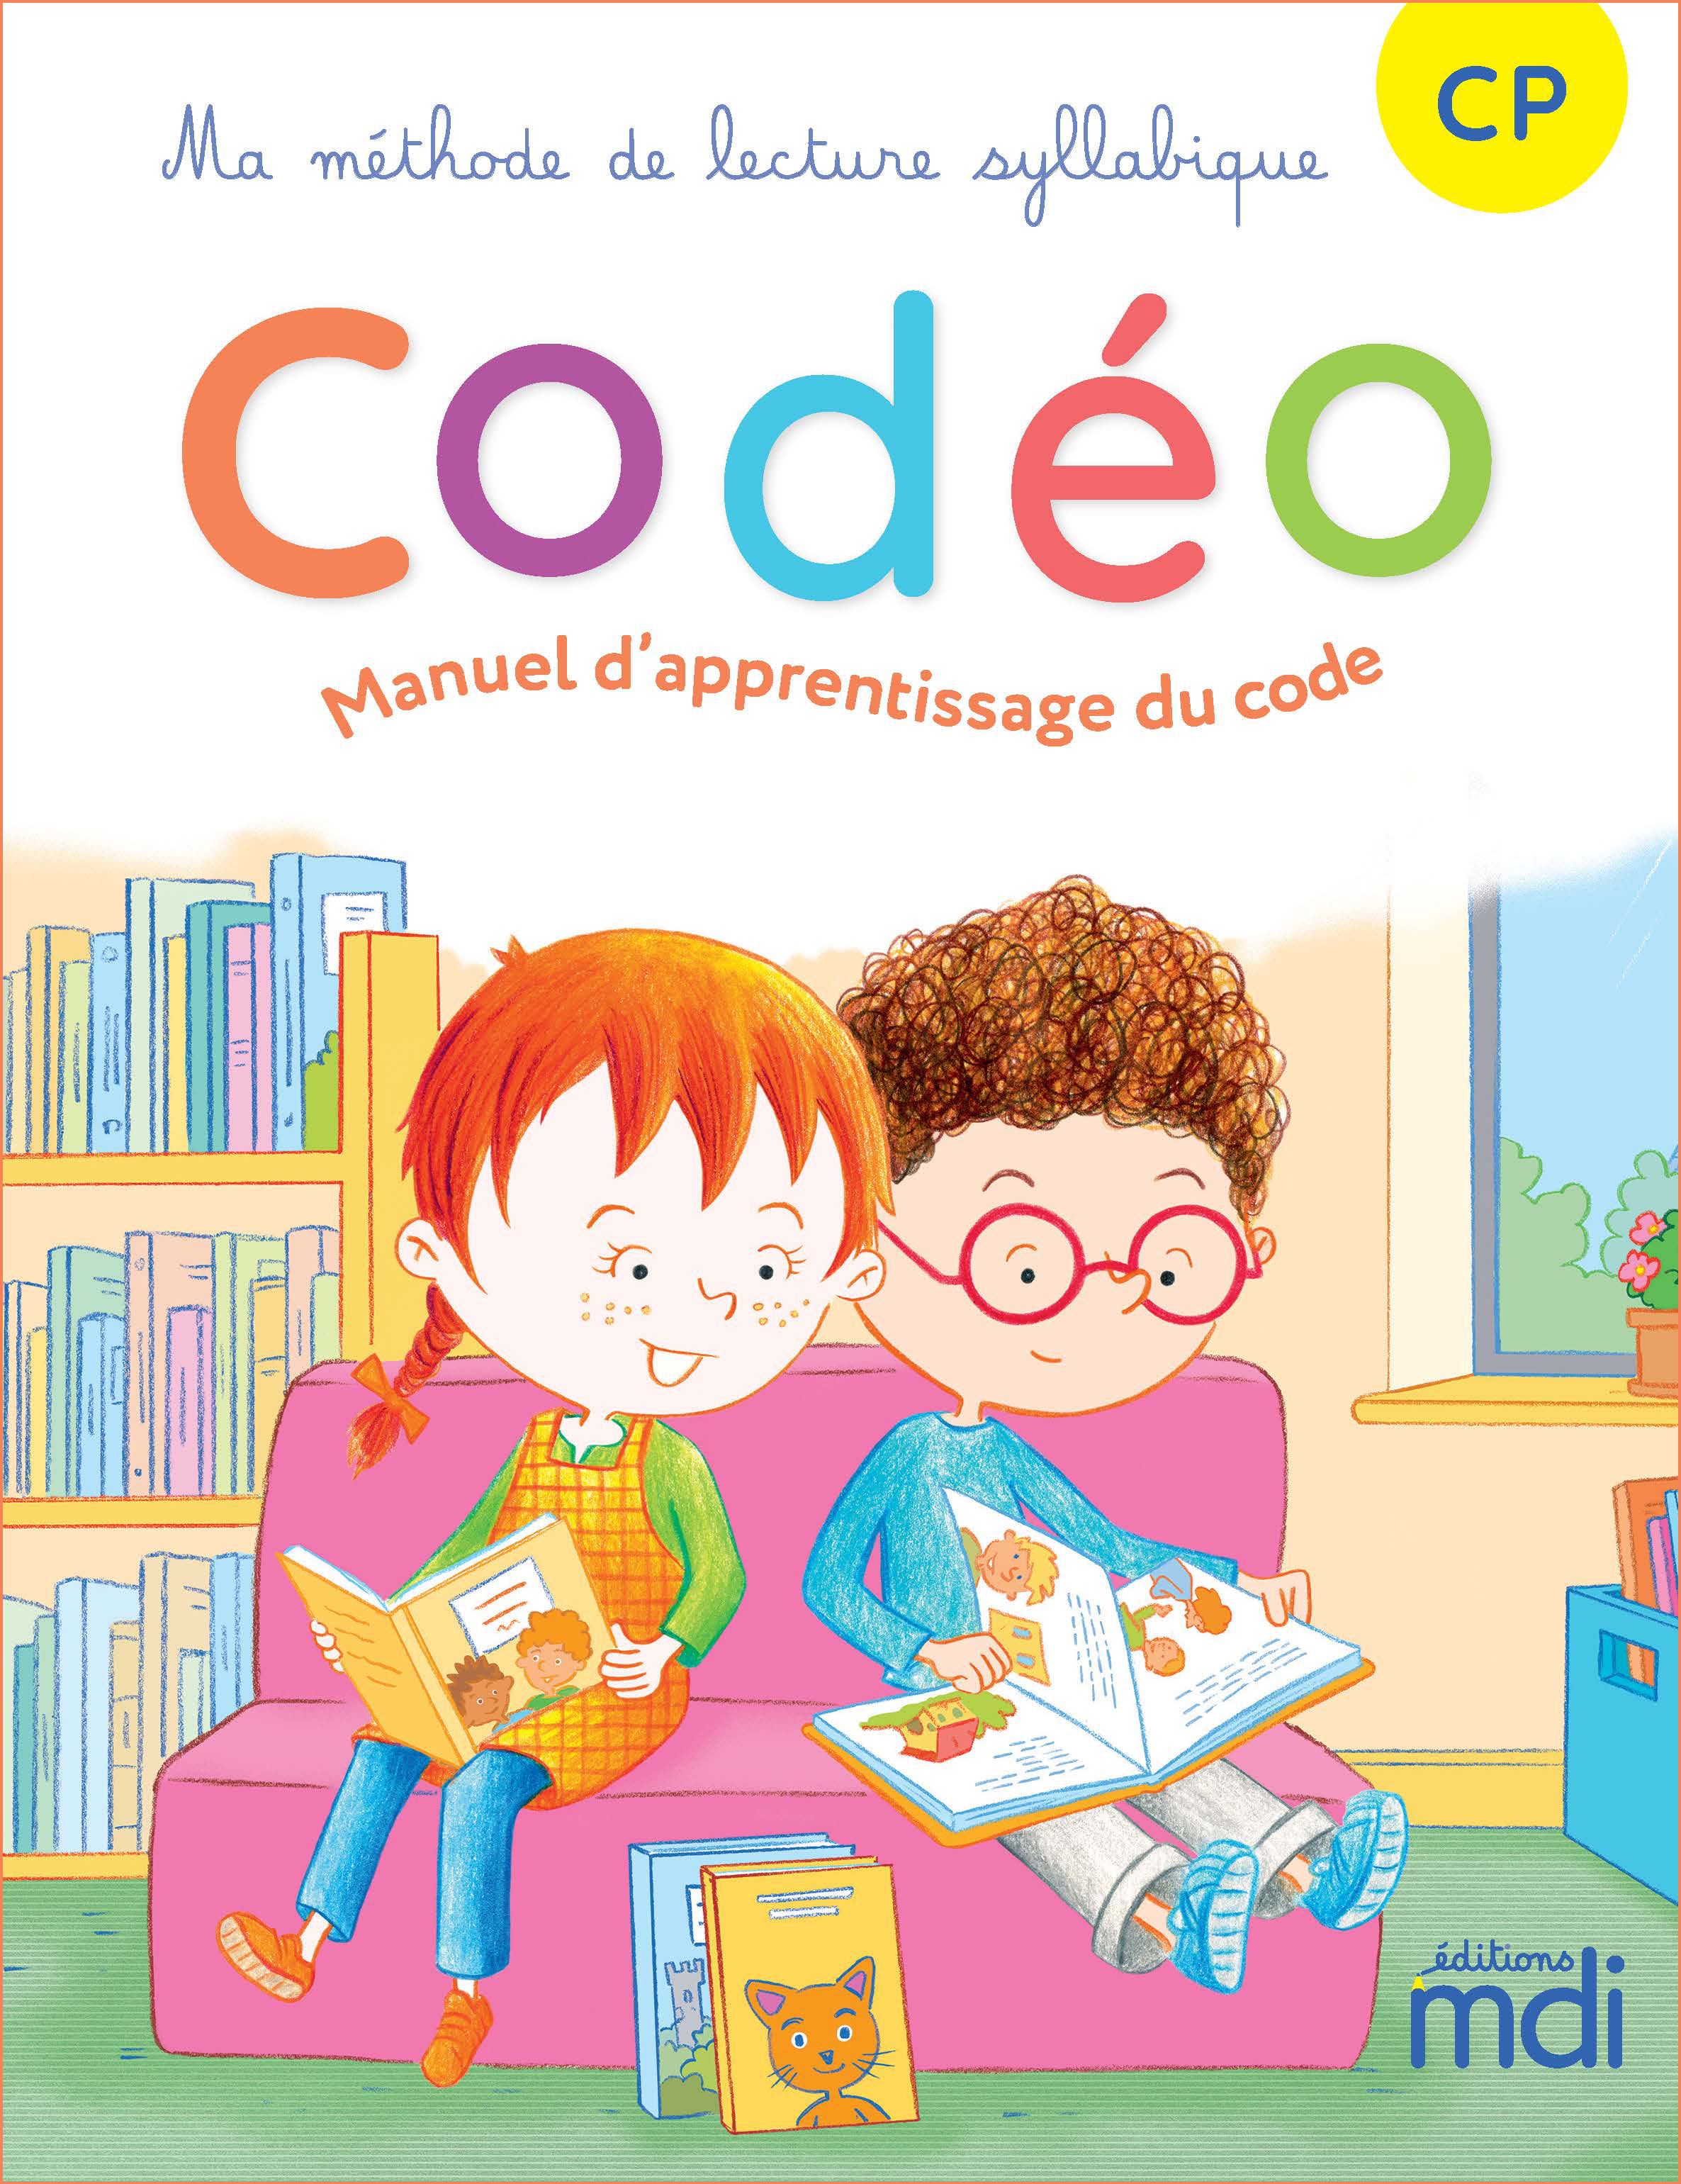 Manuel d&#39;apprentissage
du code